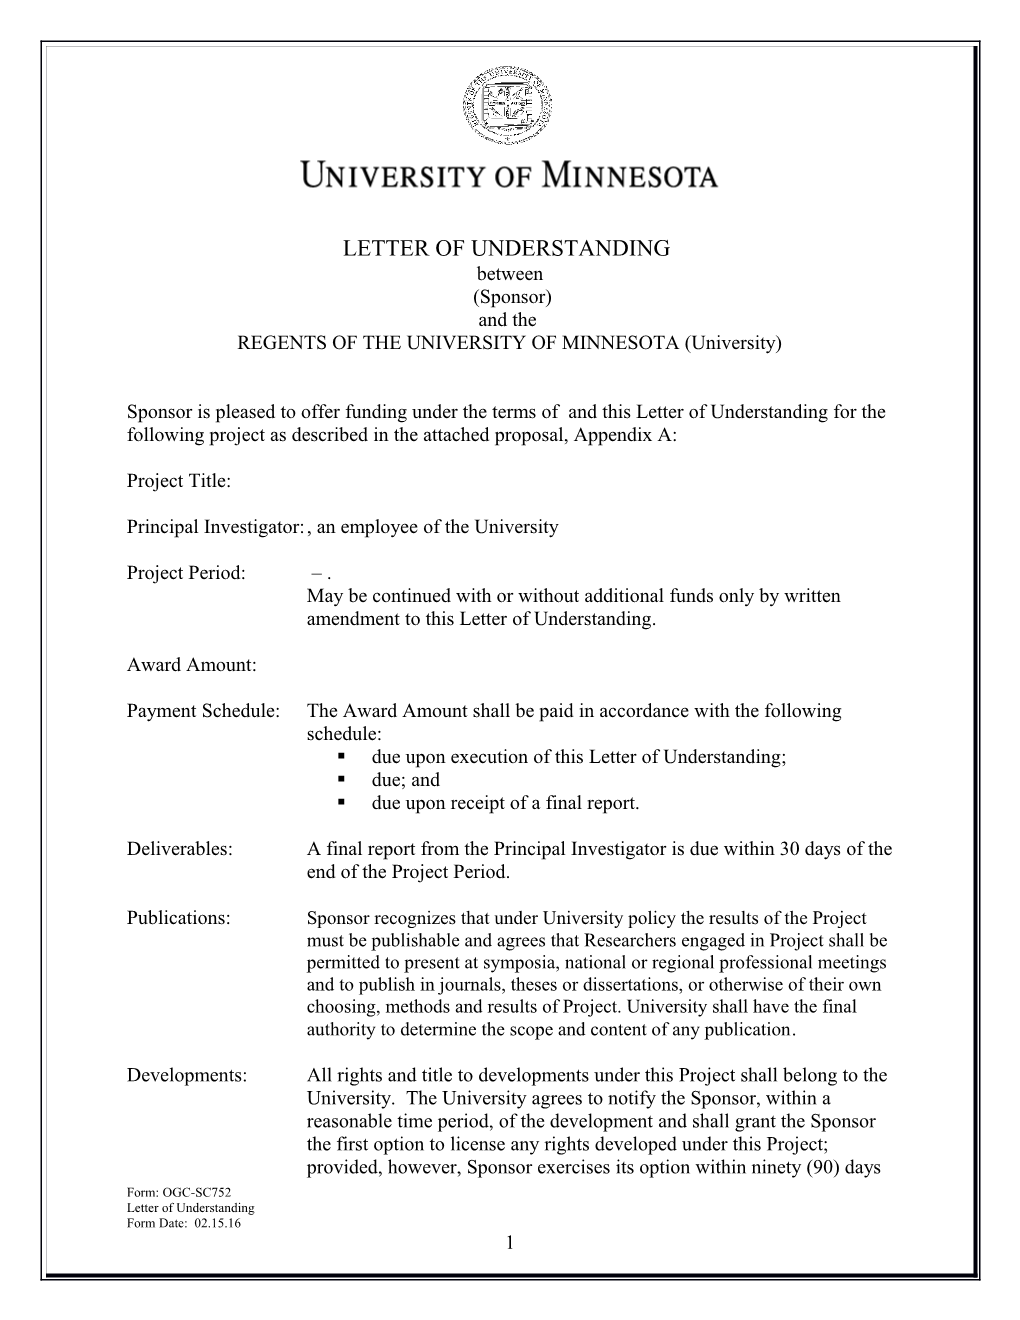 REGENTS of the UNIVERSITY of MINNESOTA (University)